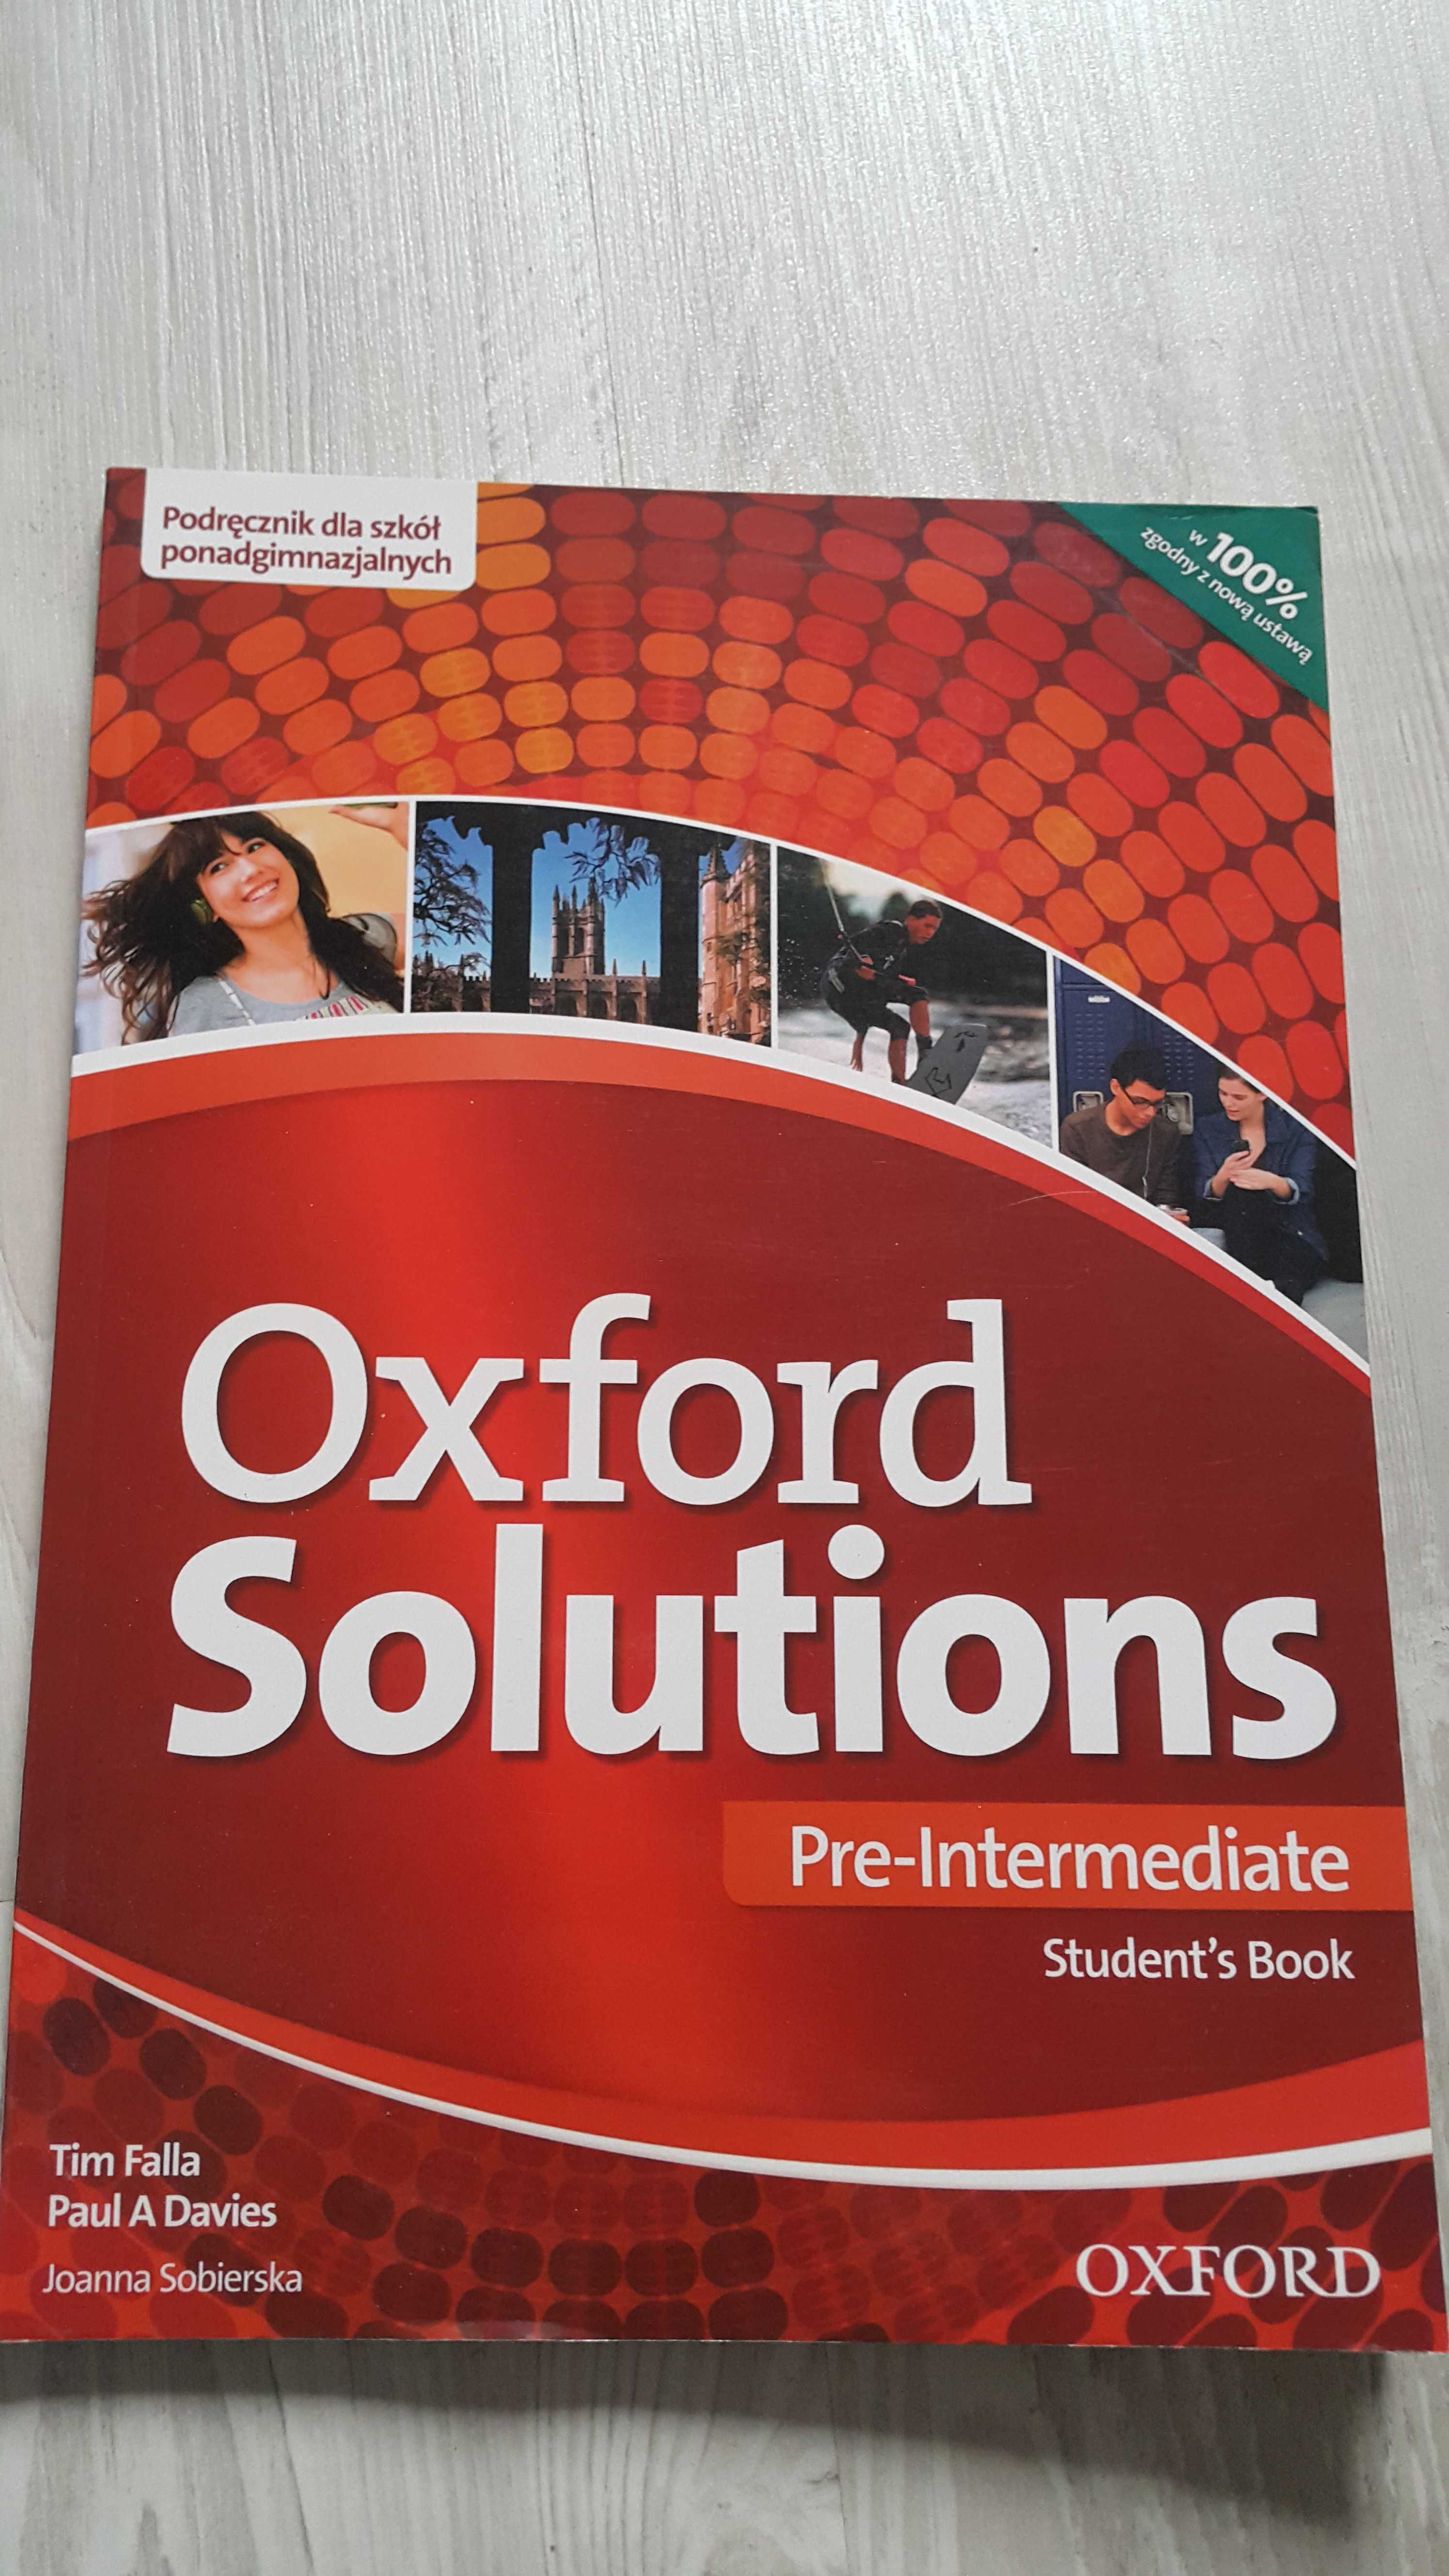 Oxford solutions Pre-Intermediate Student's book